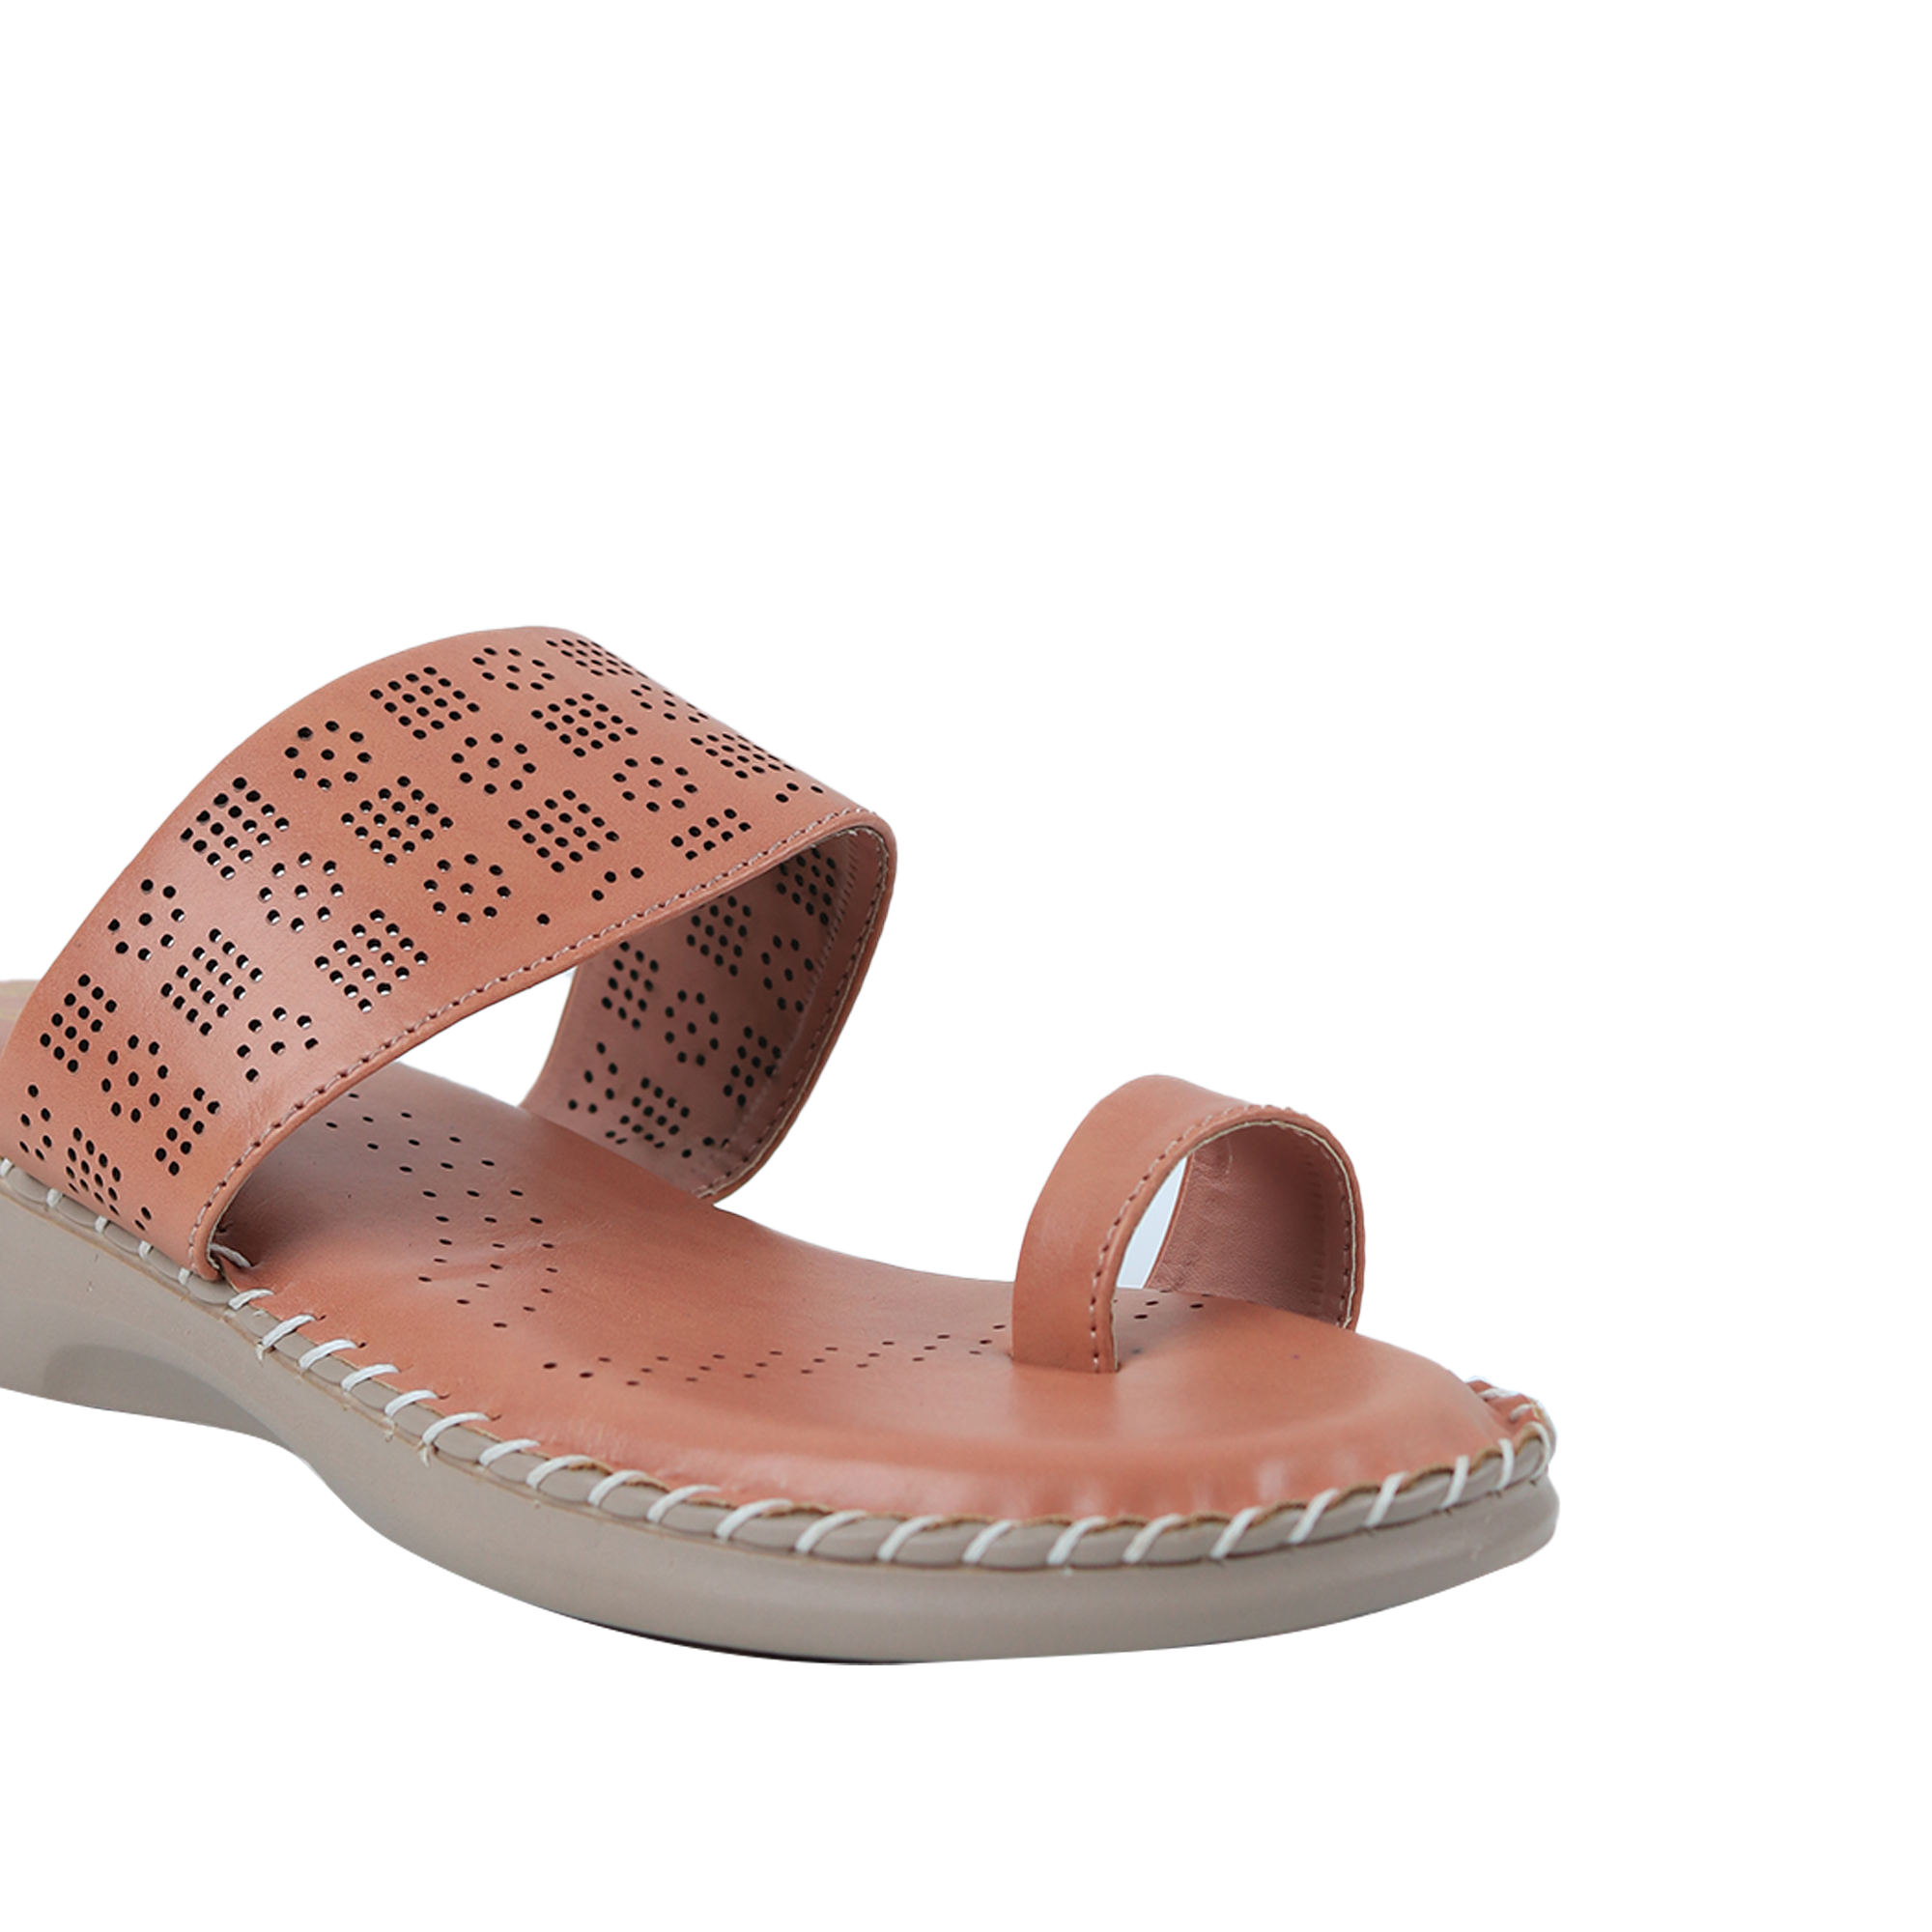 Simple Sandals Light Brown